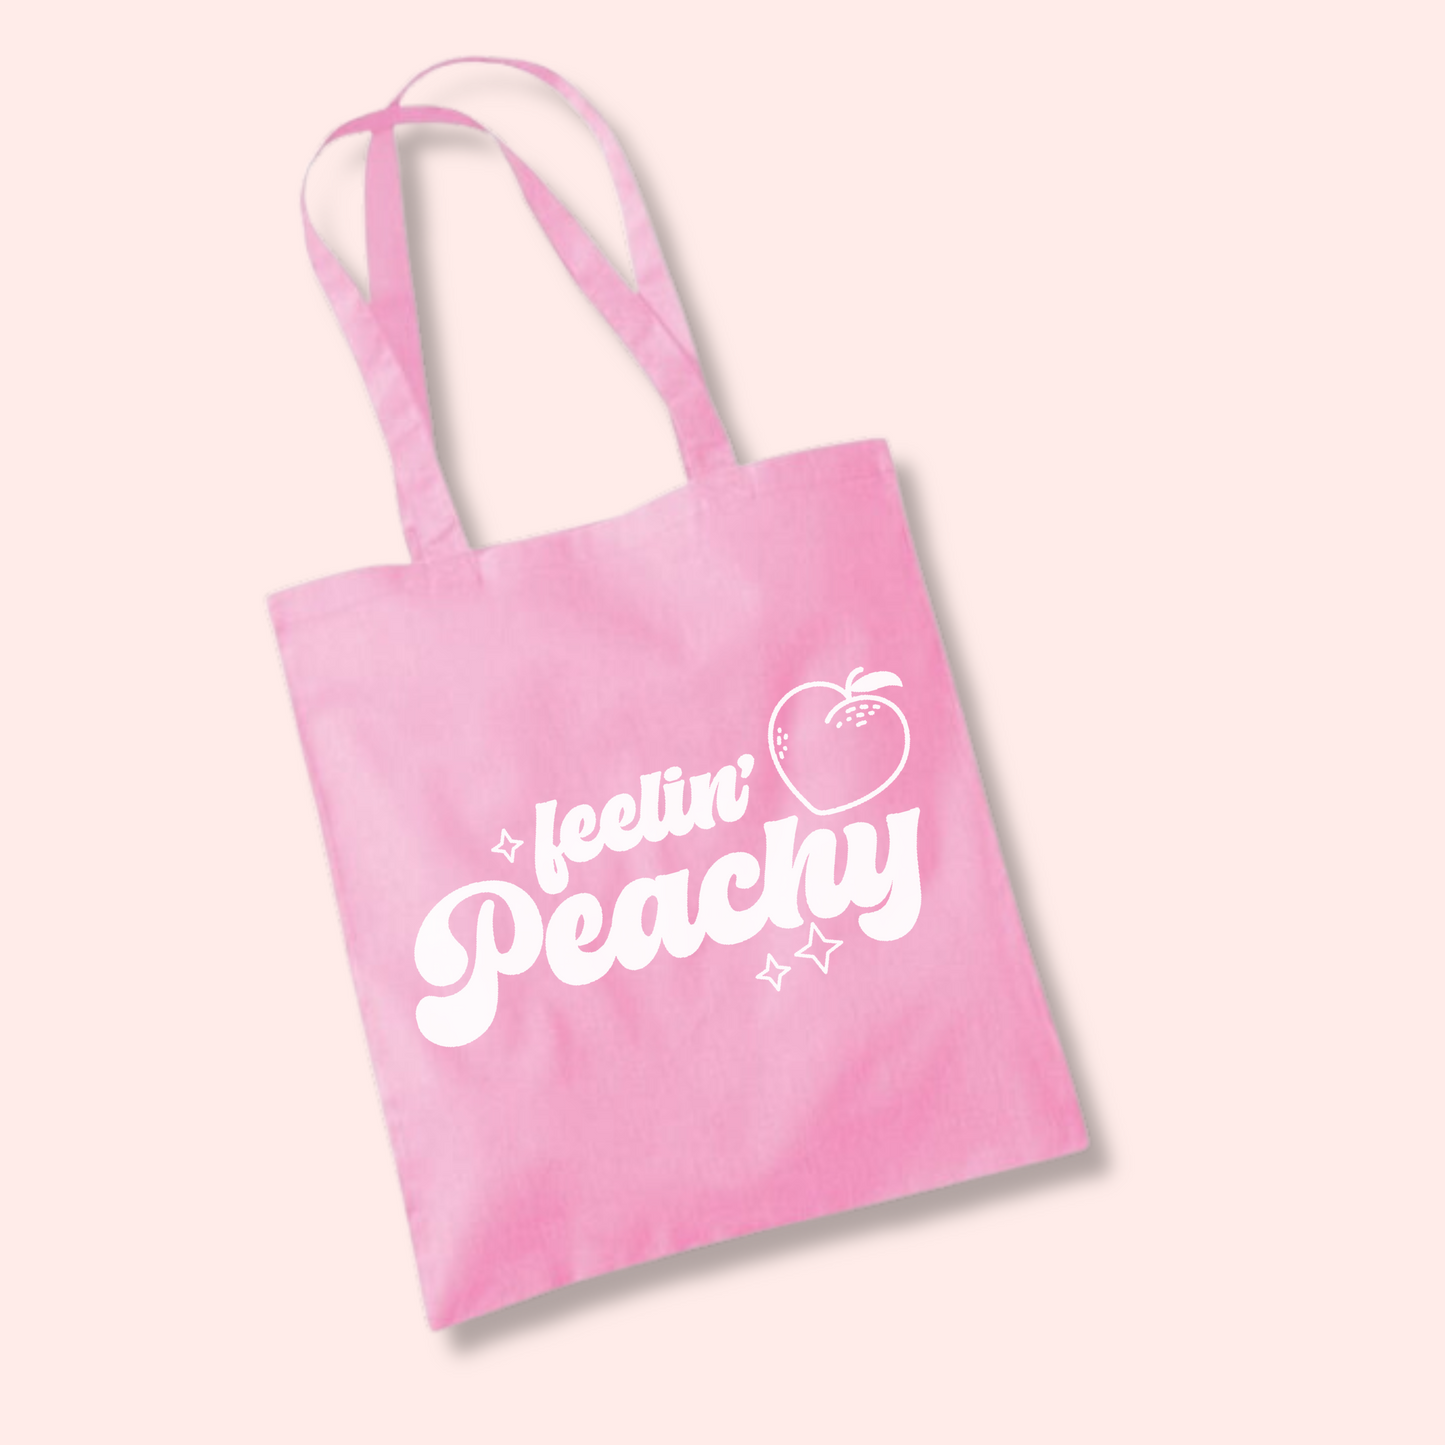 Feeling Peachy pink tote bag